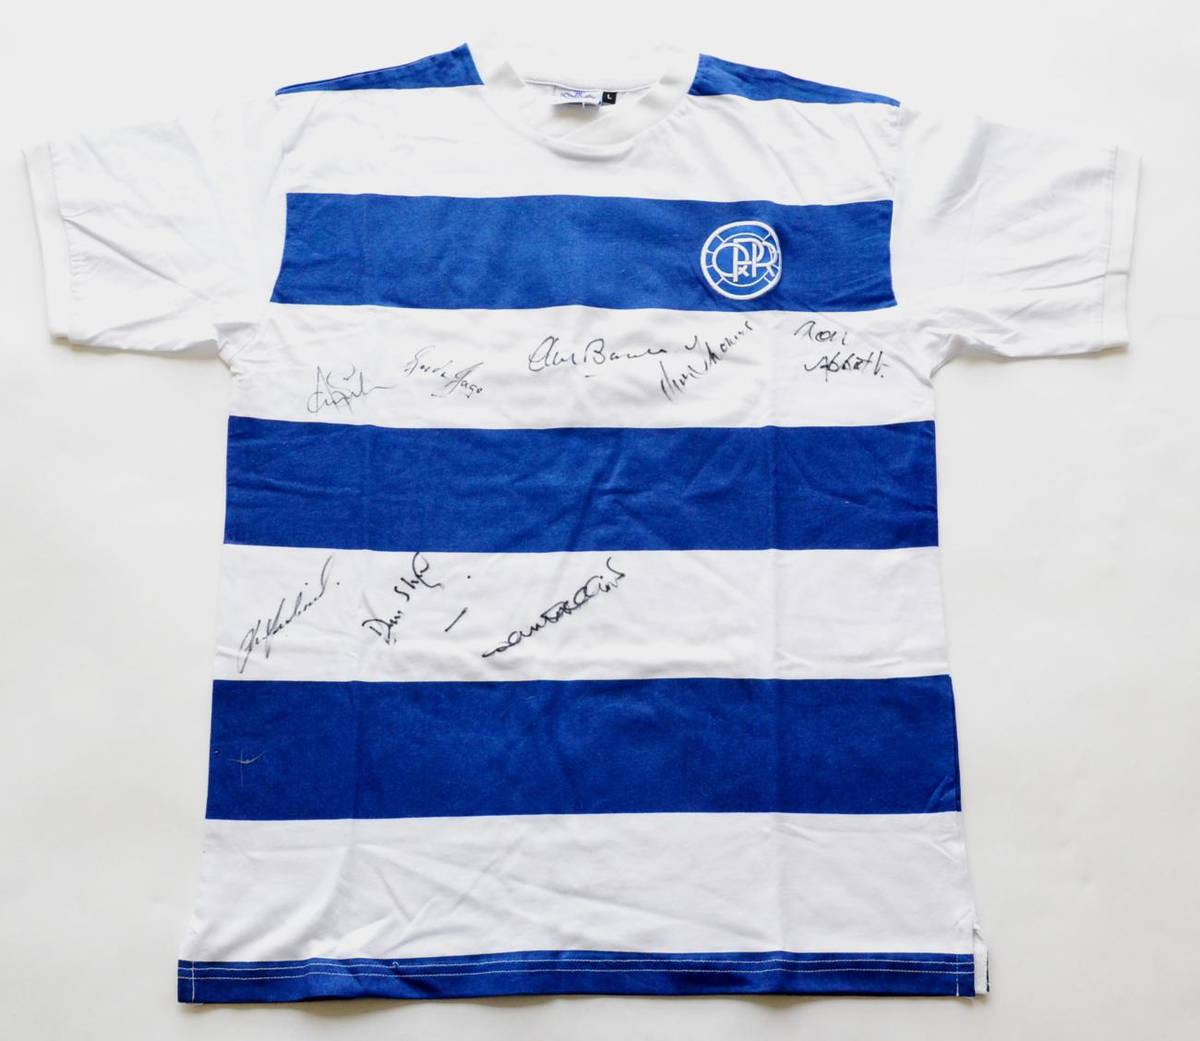 Lot 18 - Signed Football Shirt Queens Park Rangers, Blue/White Hoops